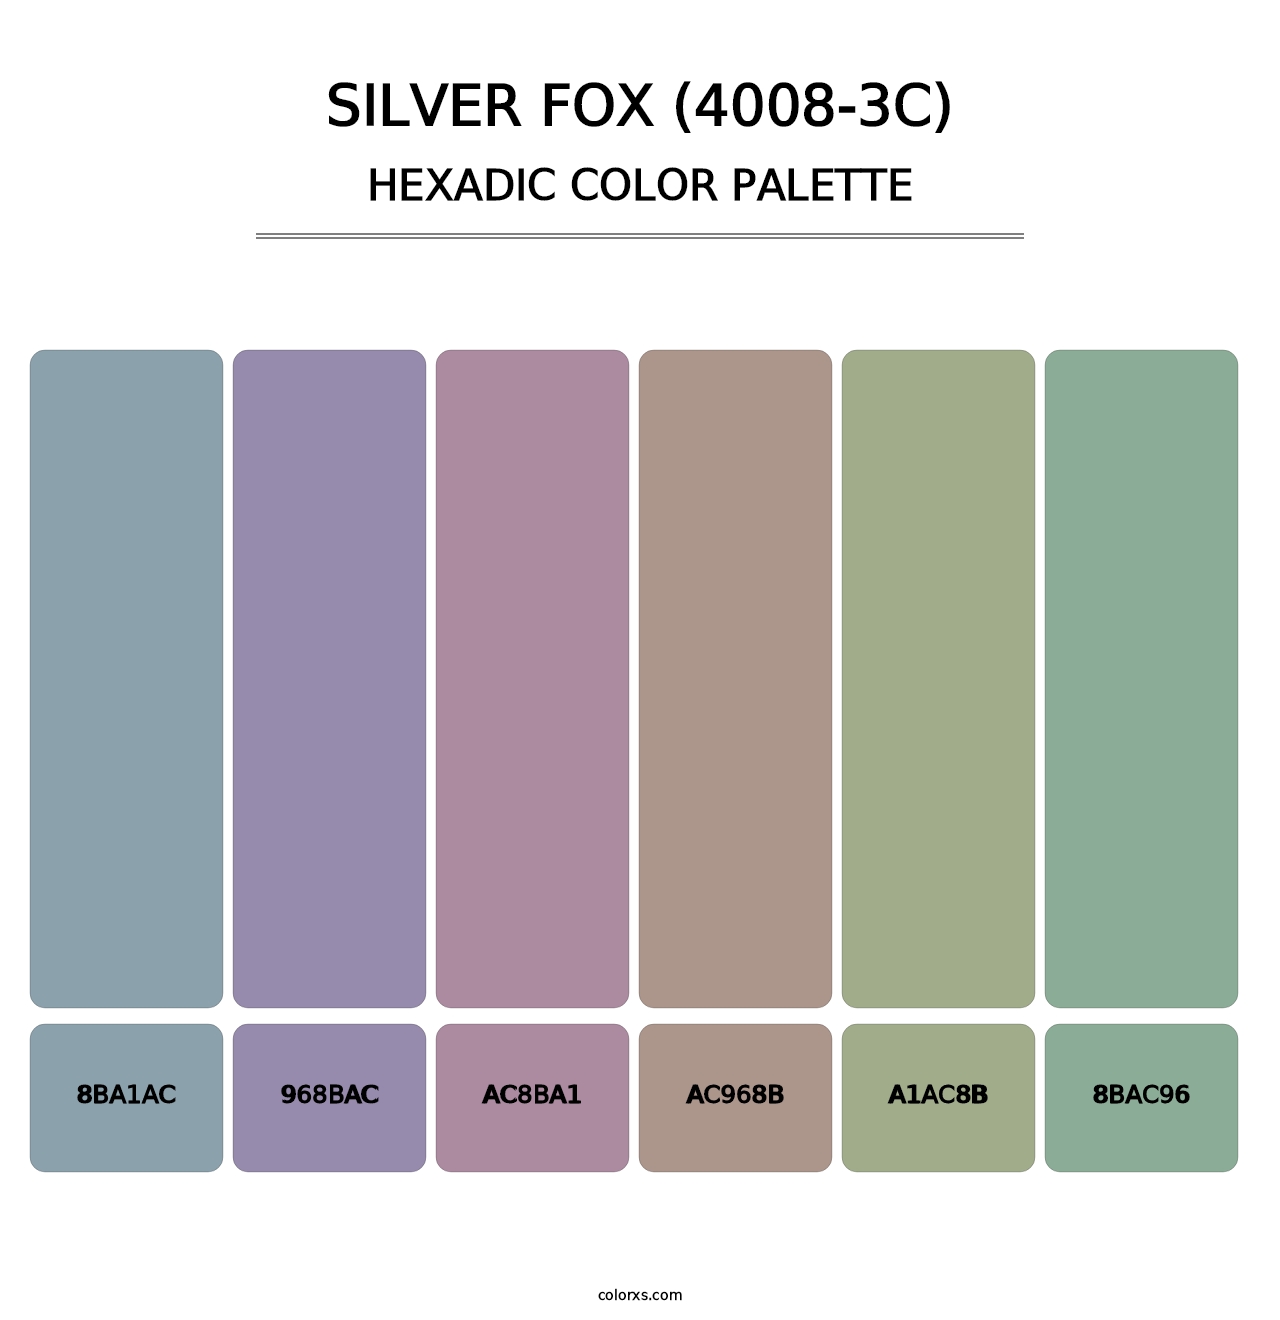 Silver Fox (4008-3C) - Hexadic Color Palette